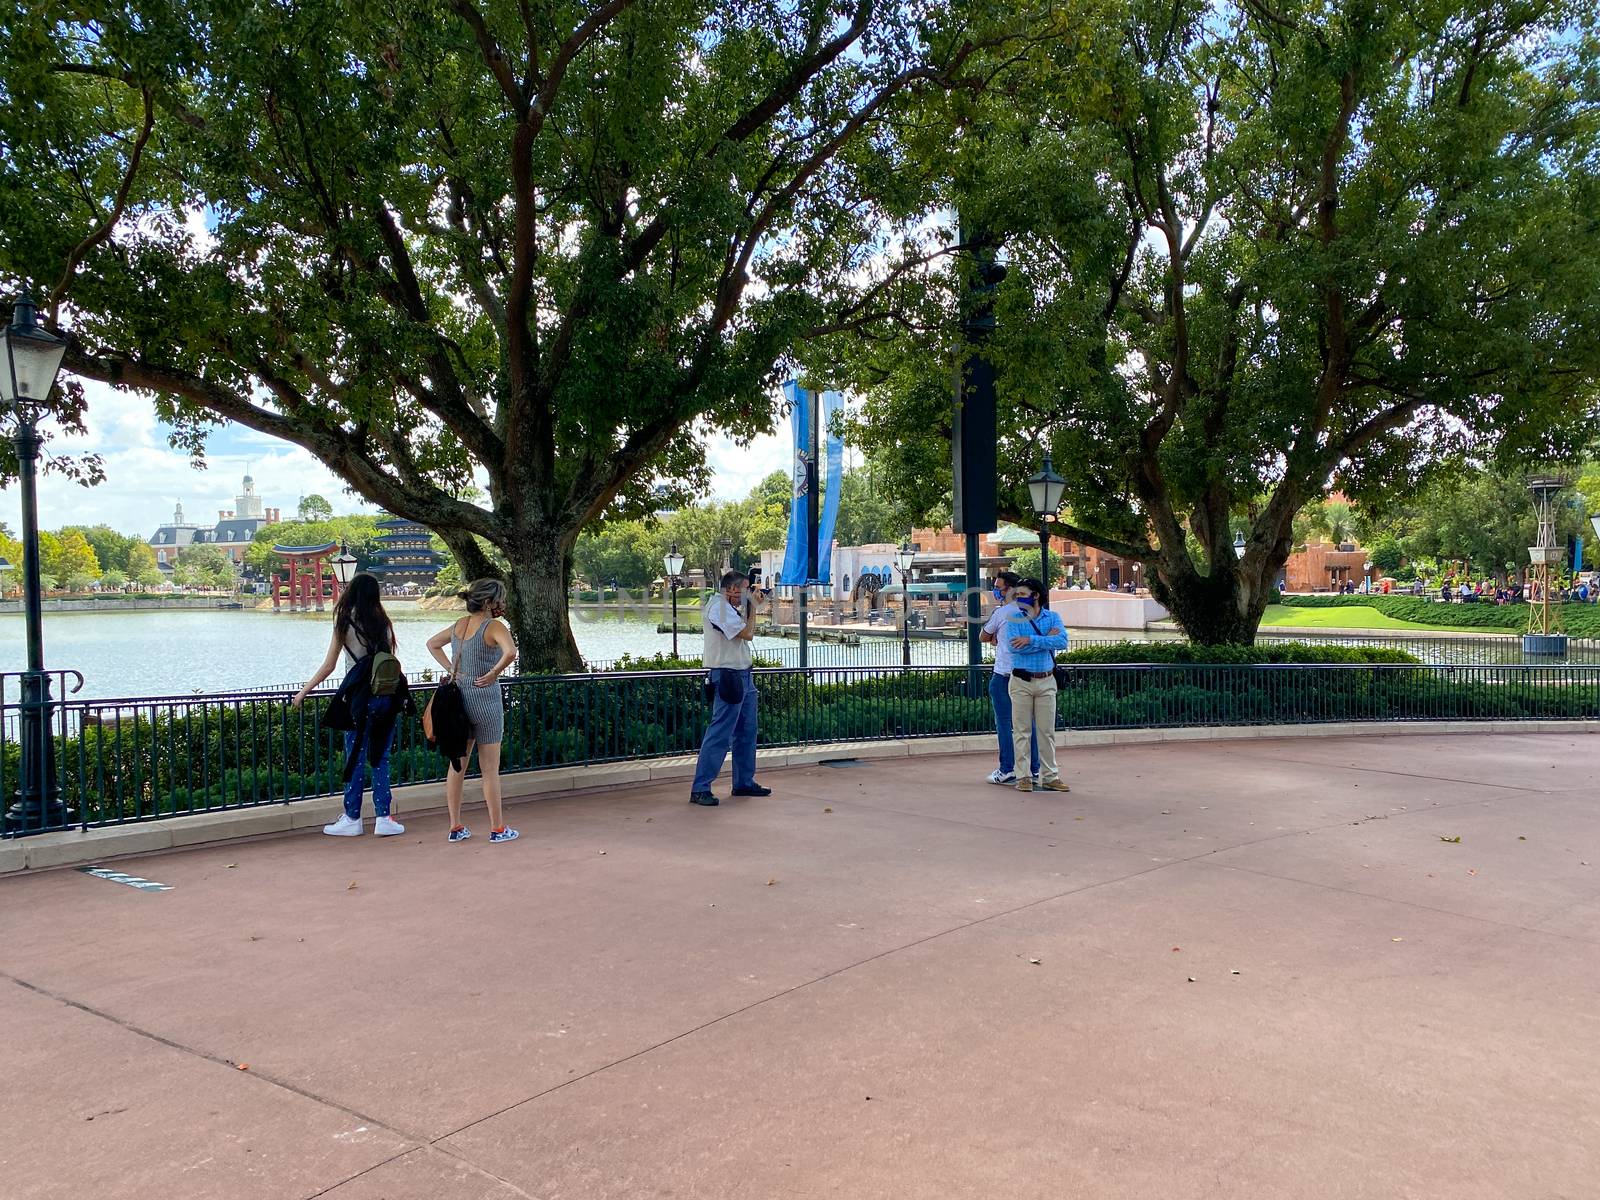 Orlando,FL/USA-10/24/20: Two men getting their photo taken in  he World Showcase in EPCOT at Disney World in Orlando, Florida.